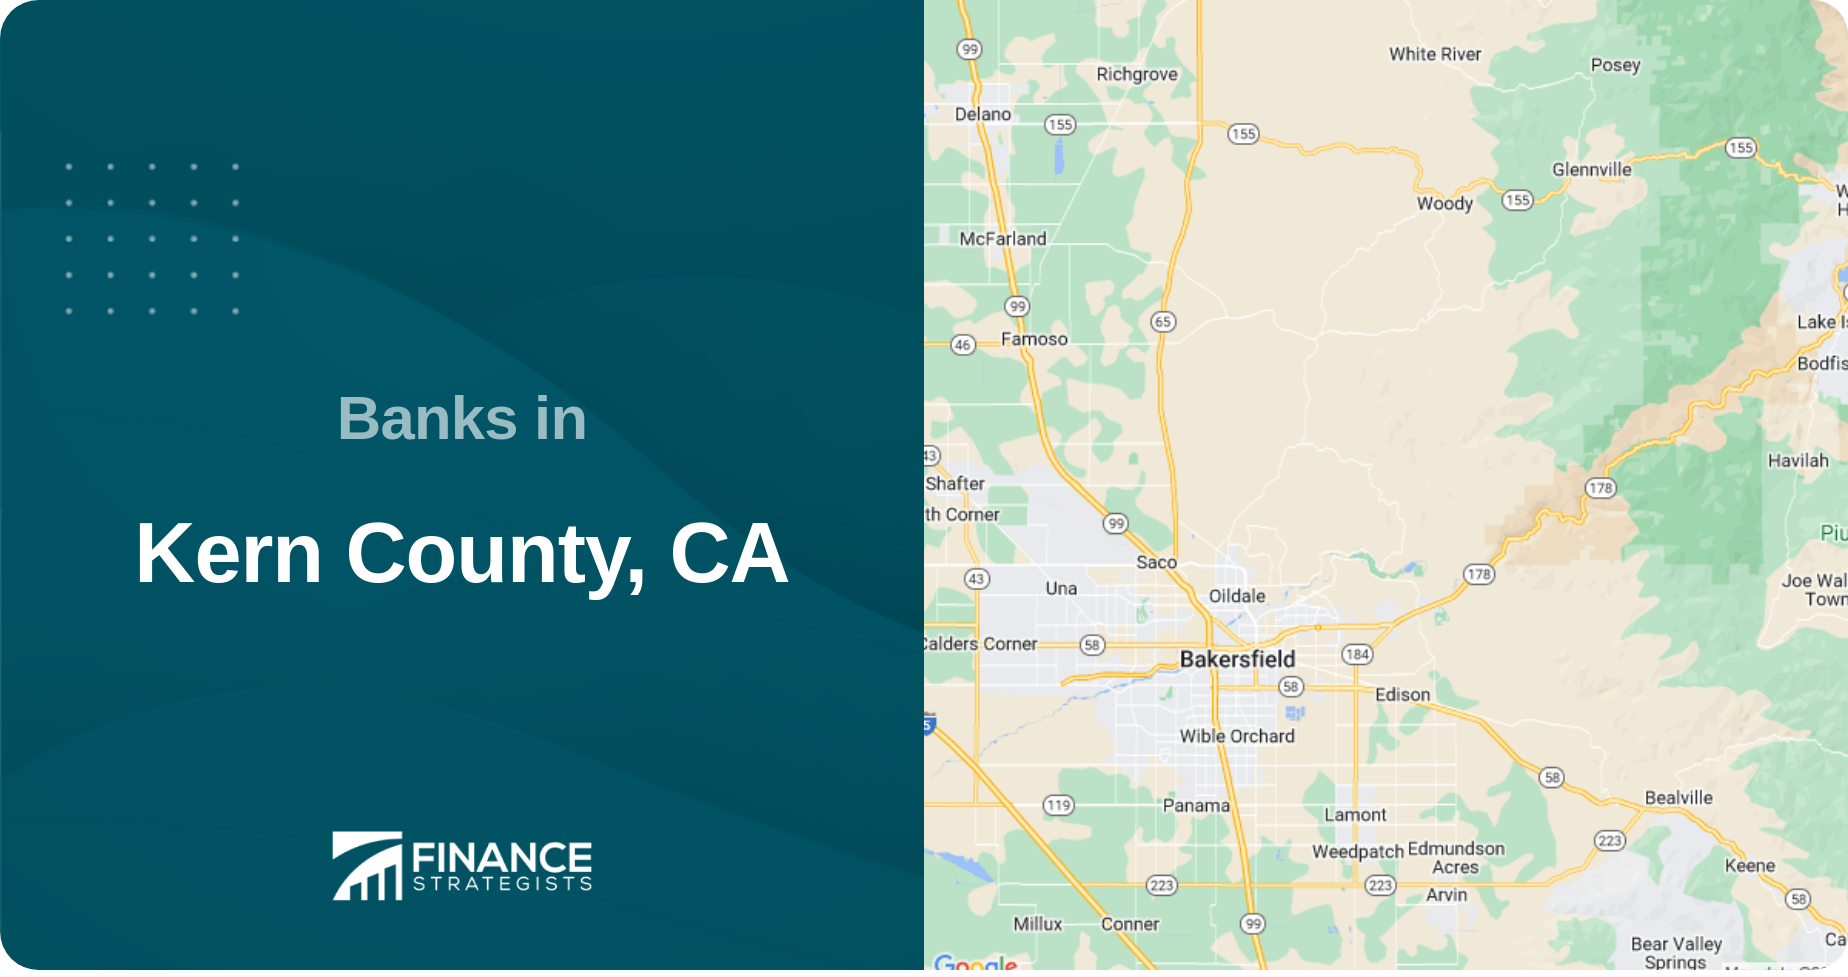 Banks in Kern County, CA